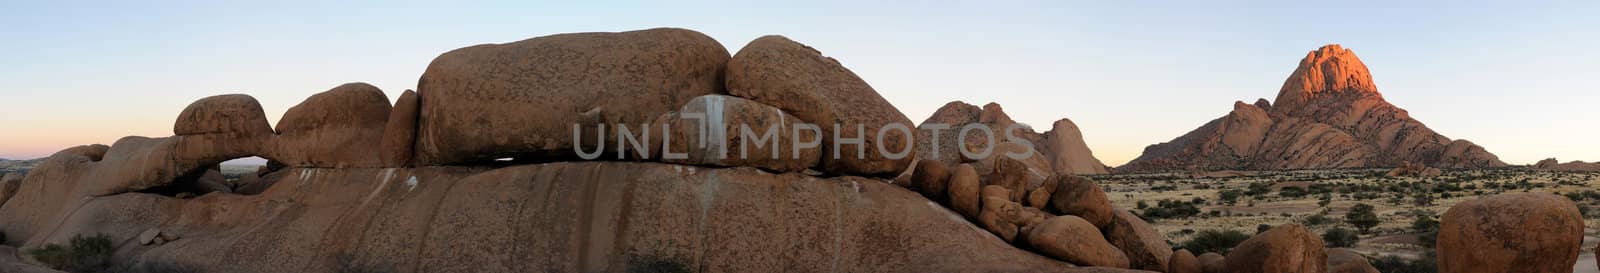 Spitzkoppe panorama, Namibia by dpreezg